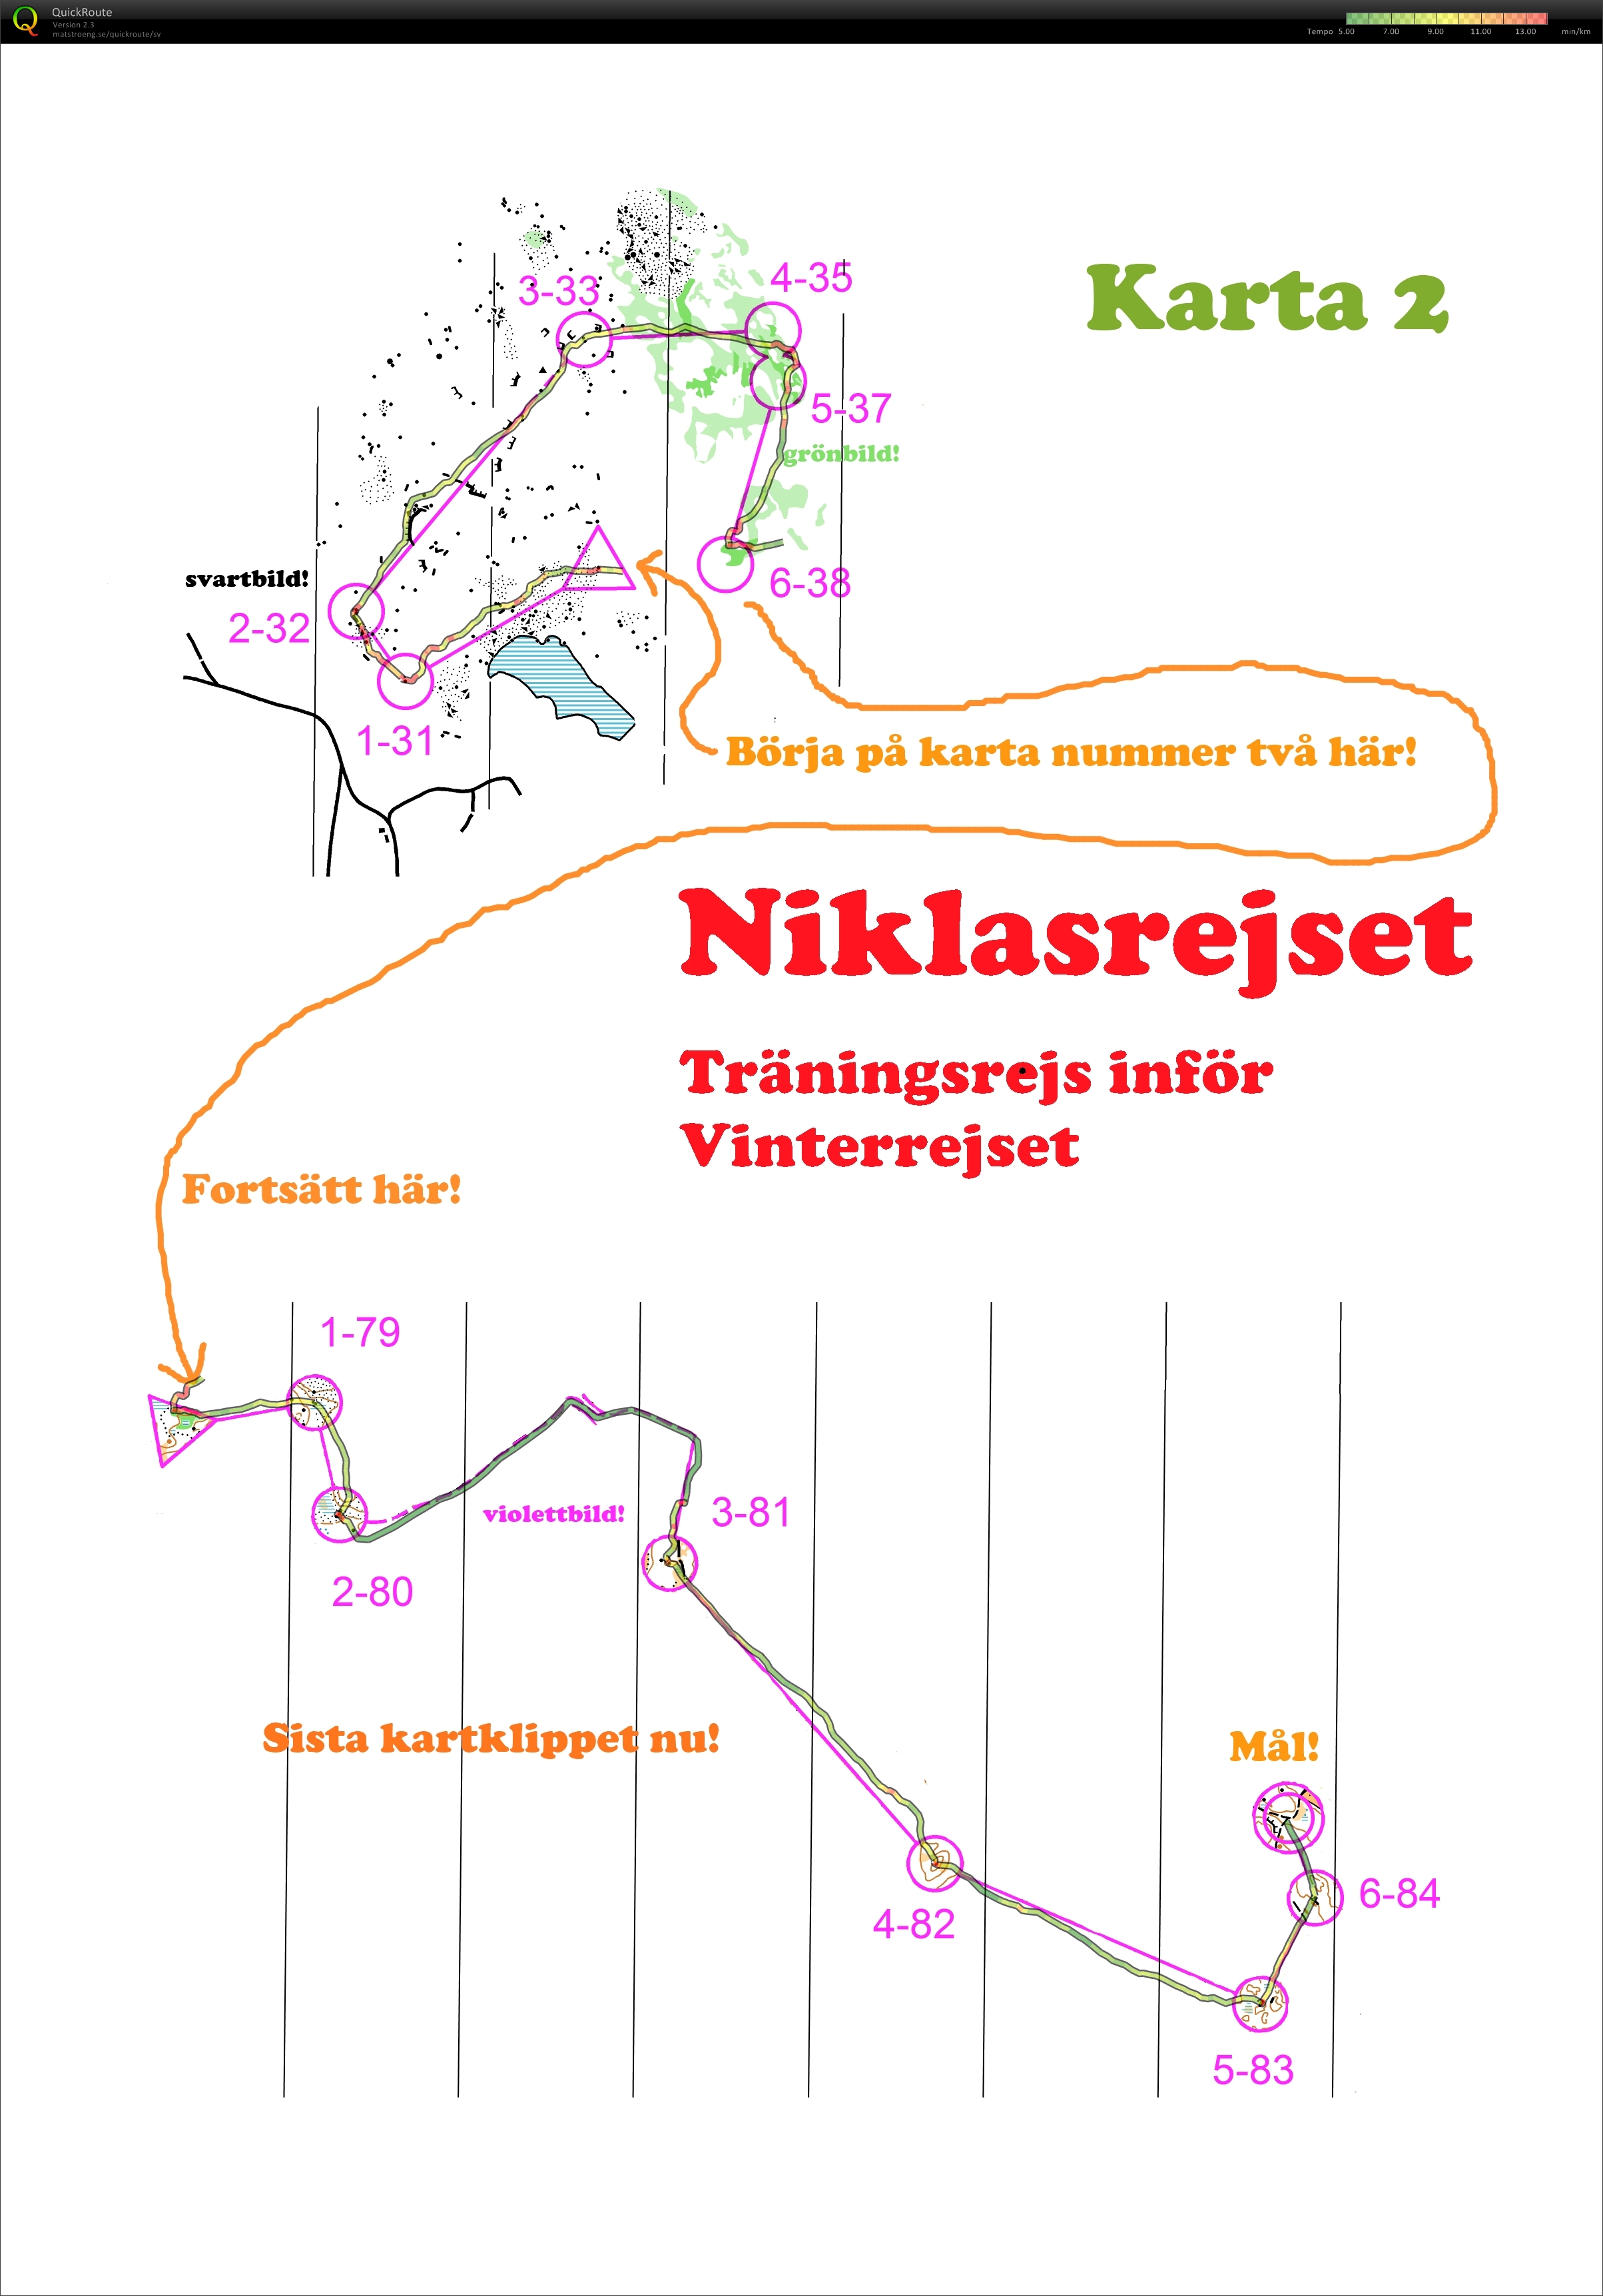 Niklasrejset - karta 2 (2011-08-06)